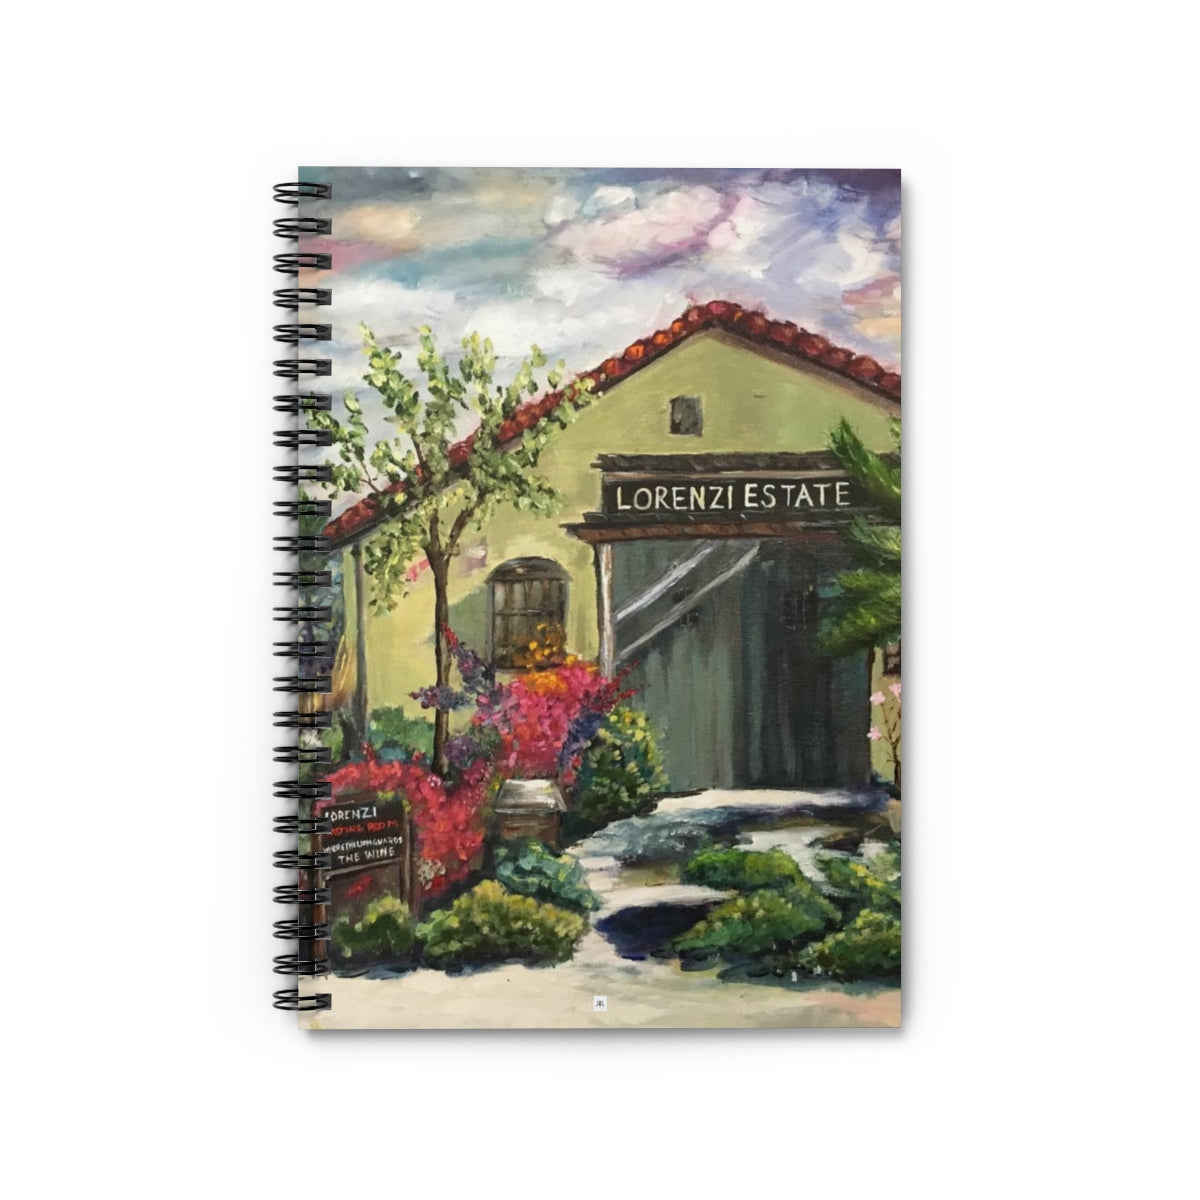 Lorenzi Estate Winery Spiral Notebook